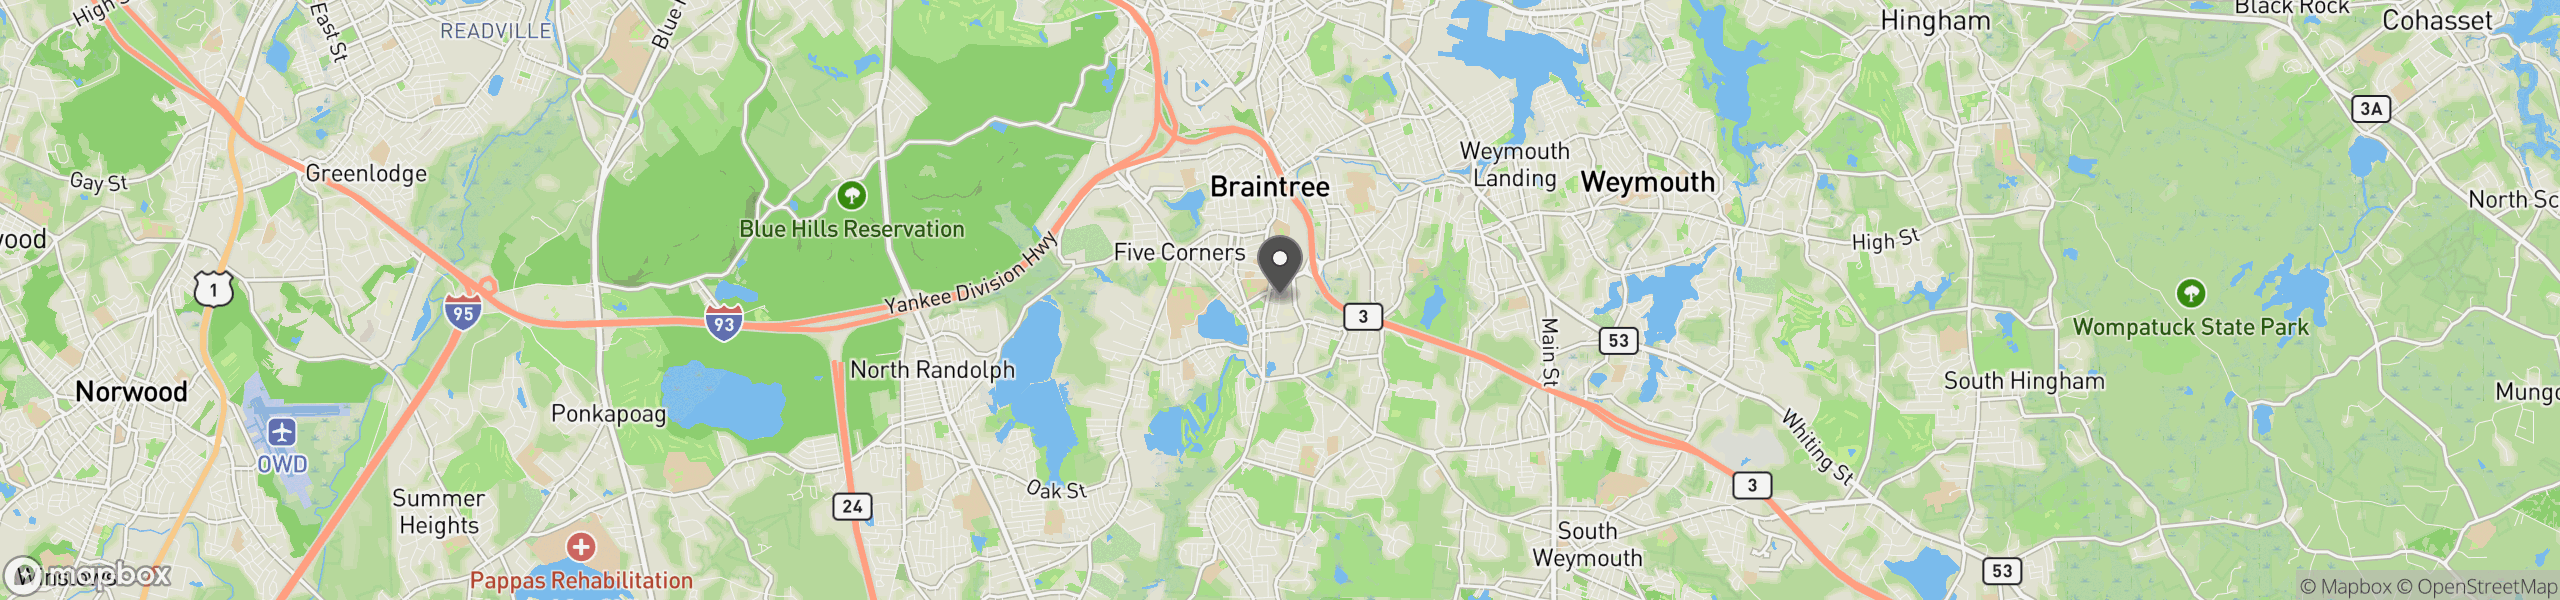 Braintree, MA 02184